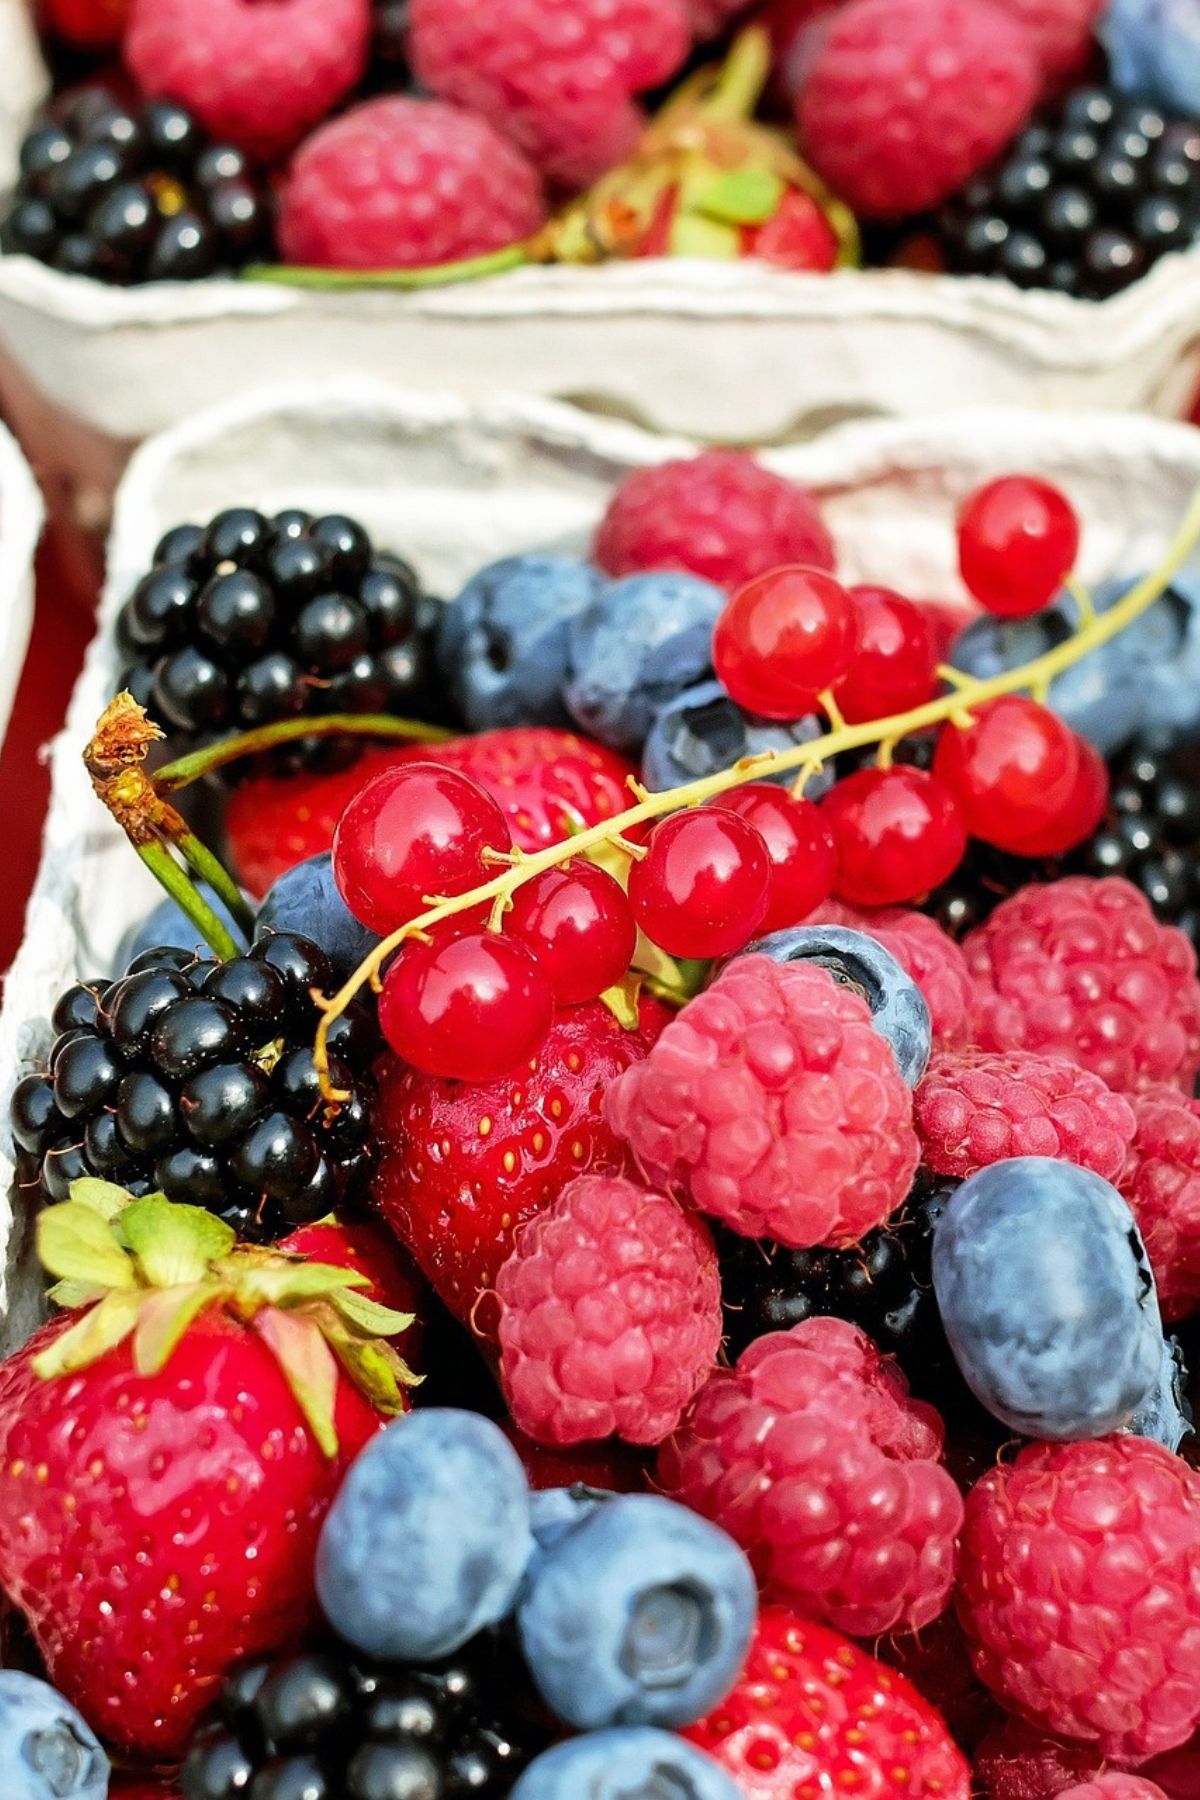 cardboard basket of berries and currants